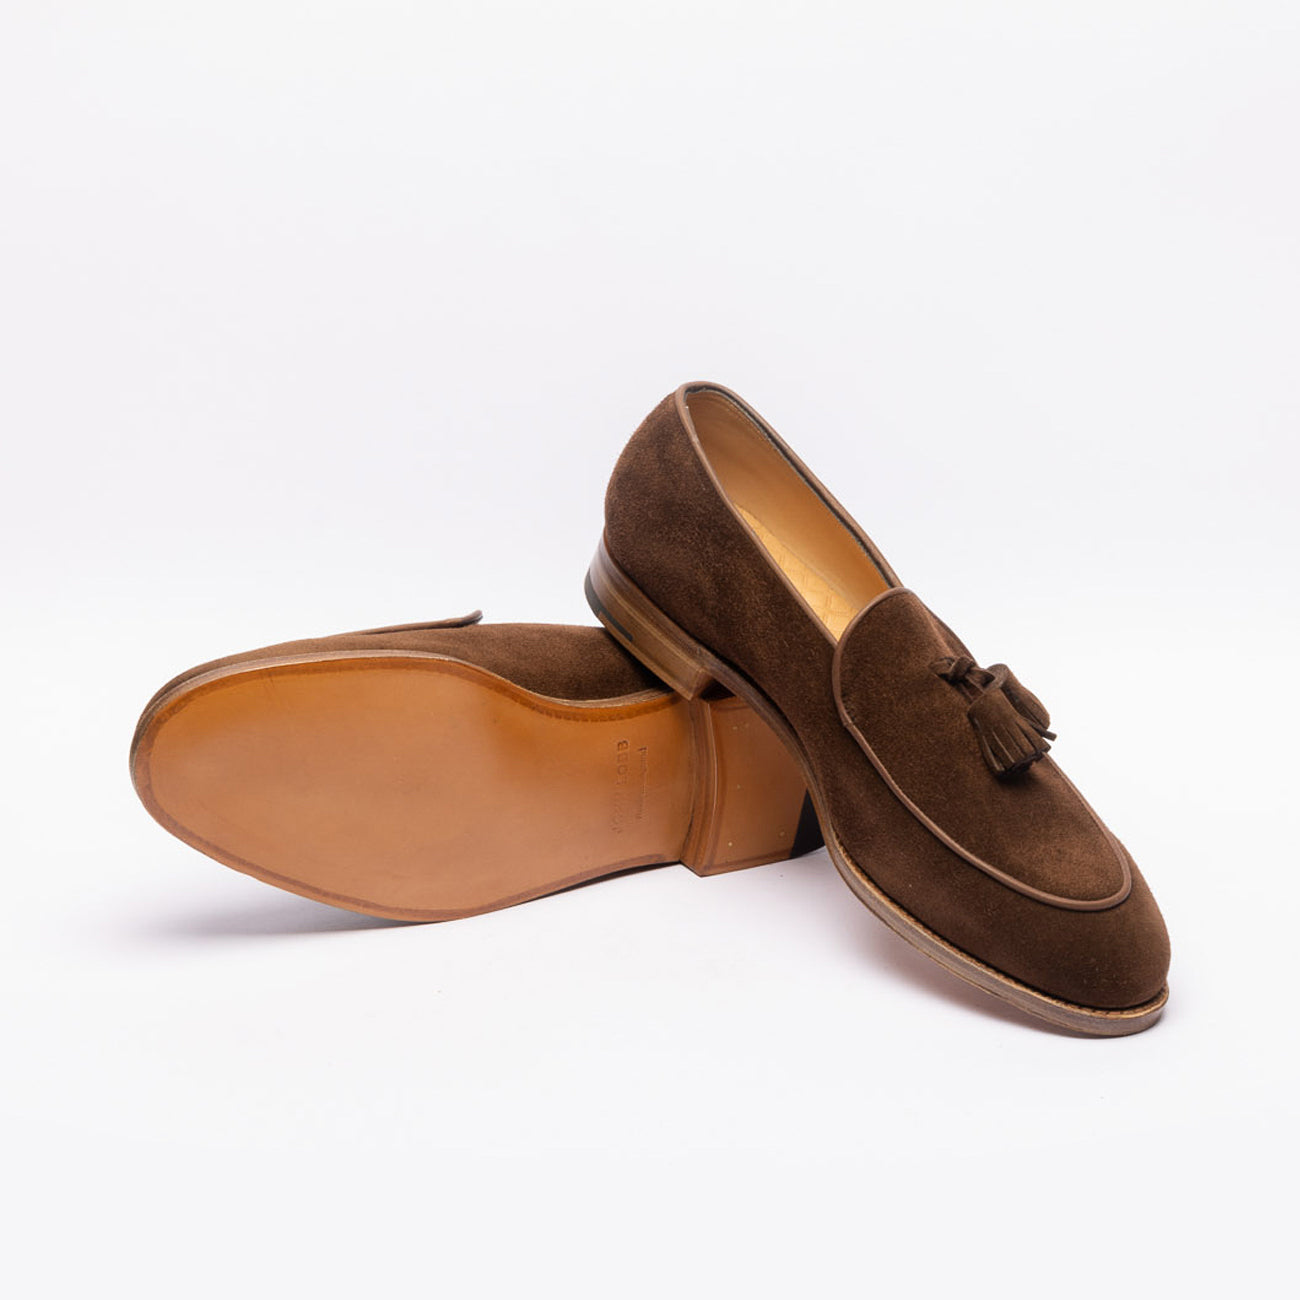 John Lobb Edmond tassel loafers in brown suede